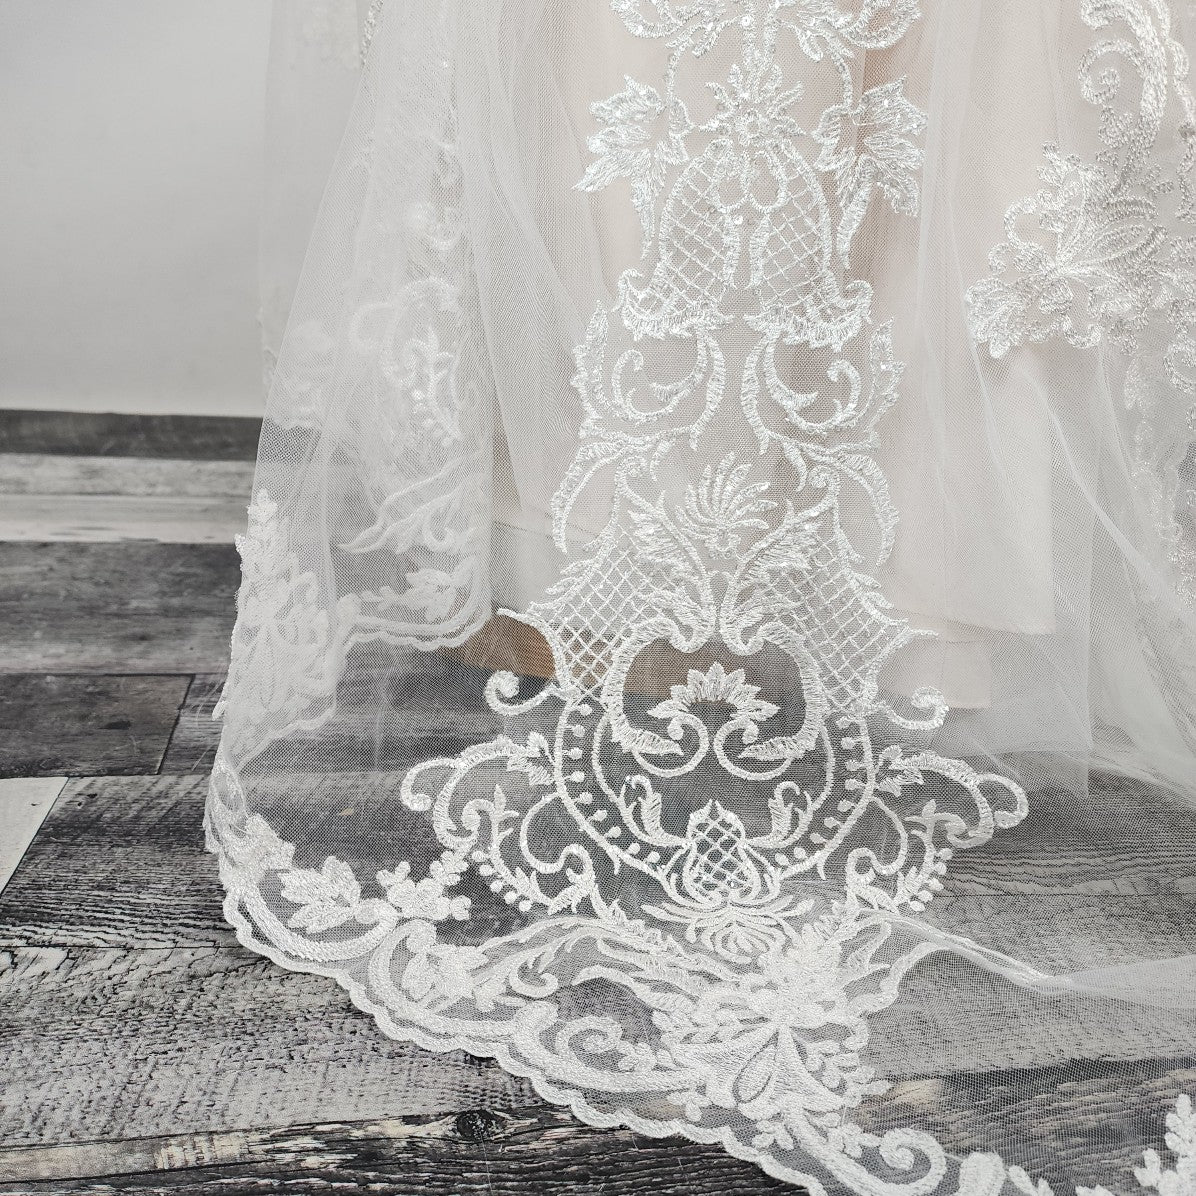 Stella York Cream Beaded Lace Wedding Gown Size M